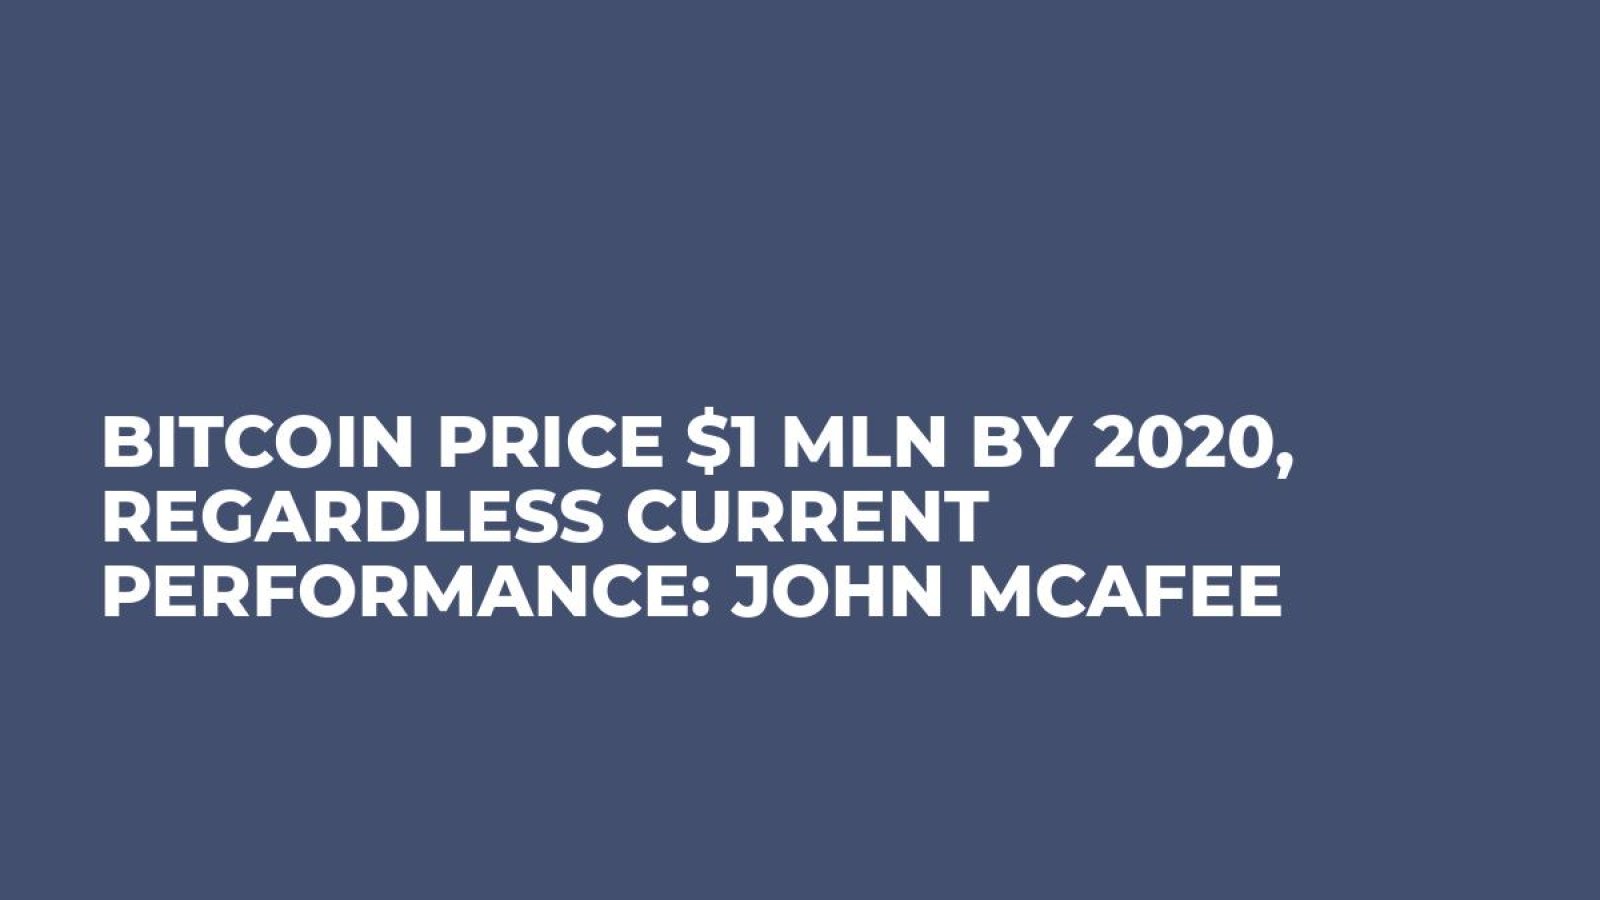 Bitcoin Price $1 mln by 2020, Regardless Current Performance: John McAfee